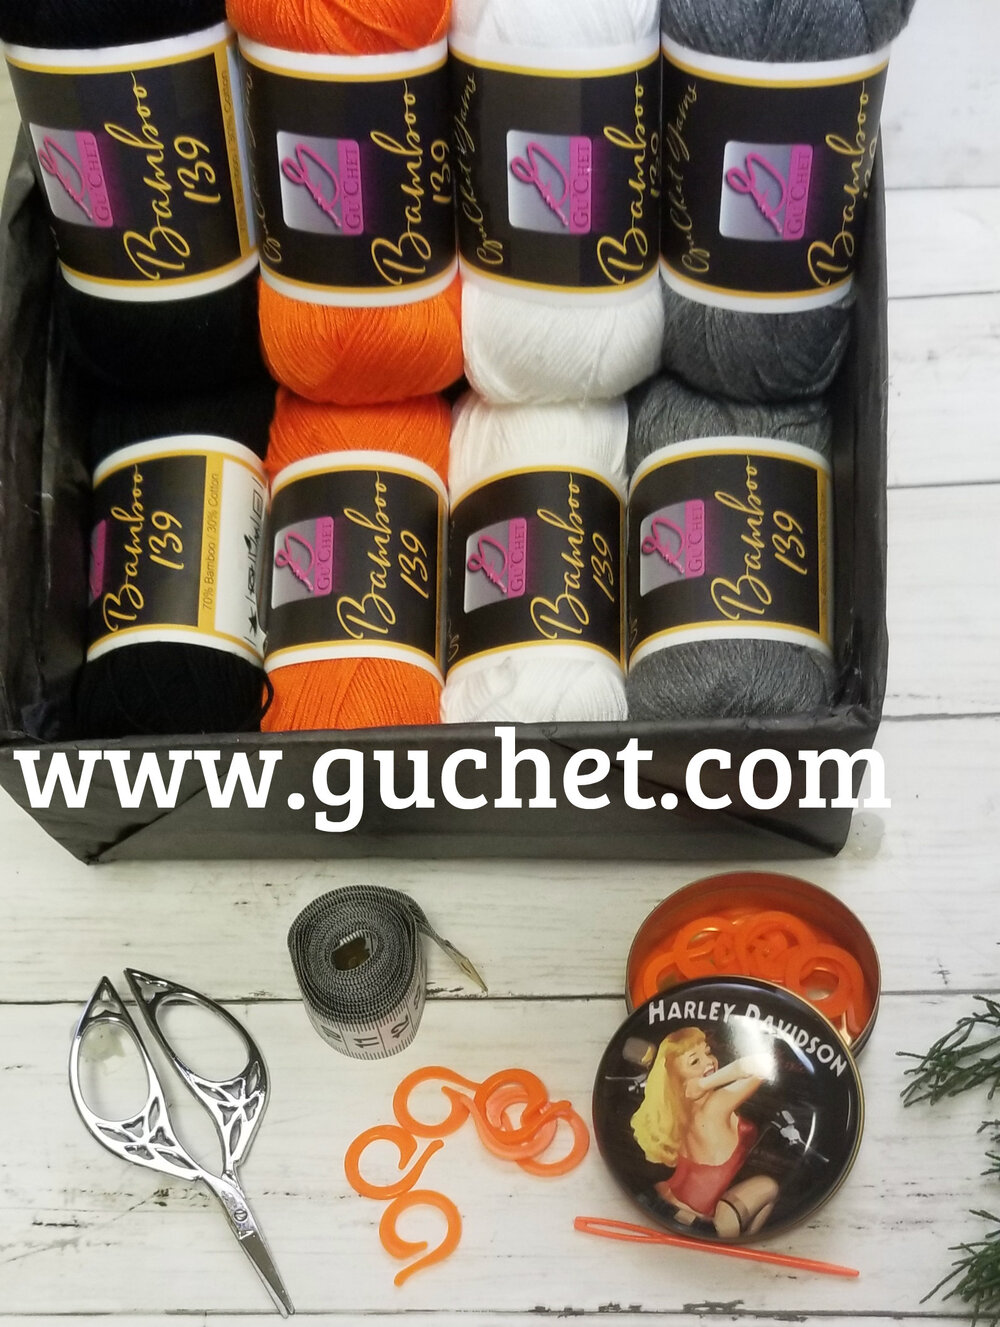 Yarn Gift Set By GuChet — YARNS, PATTERNS, ACCESSORIES